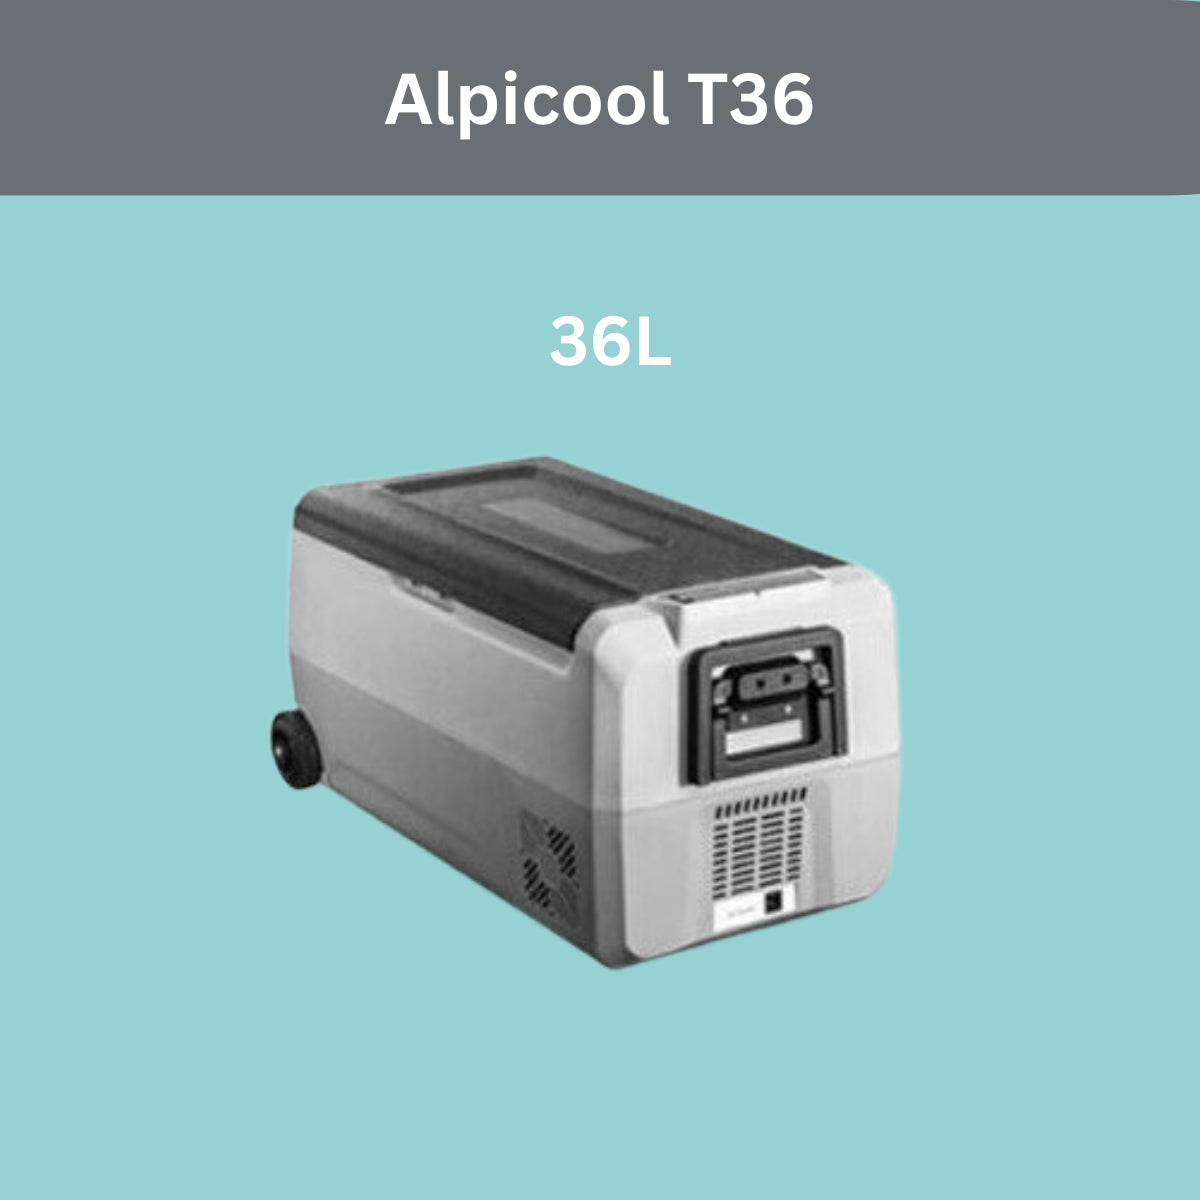 alpicool t36/36l fridge freezer photo